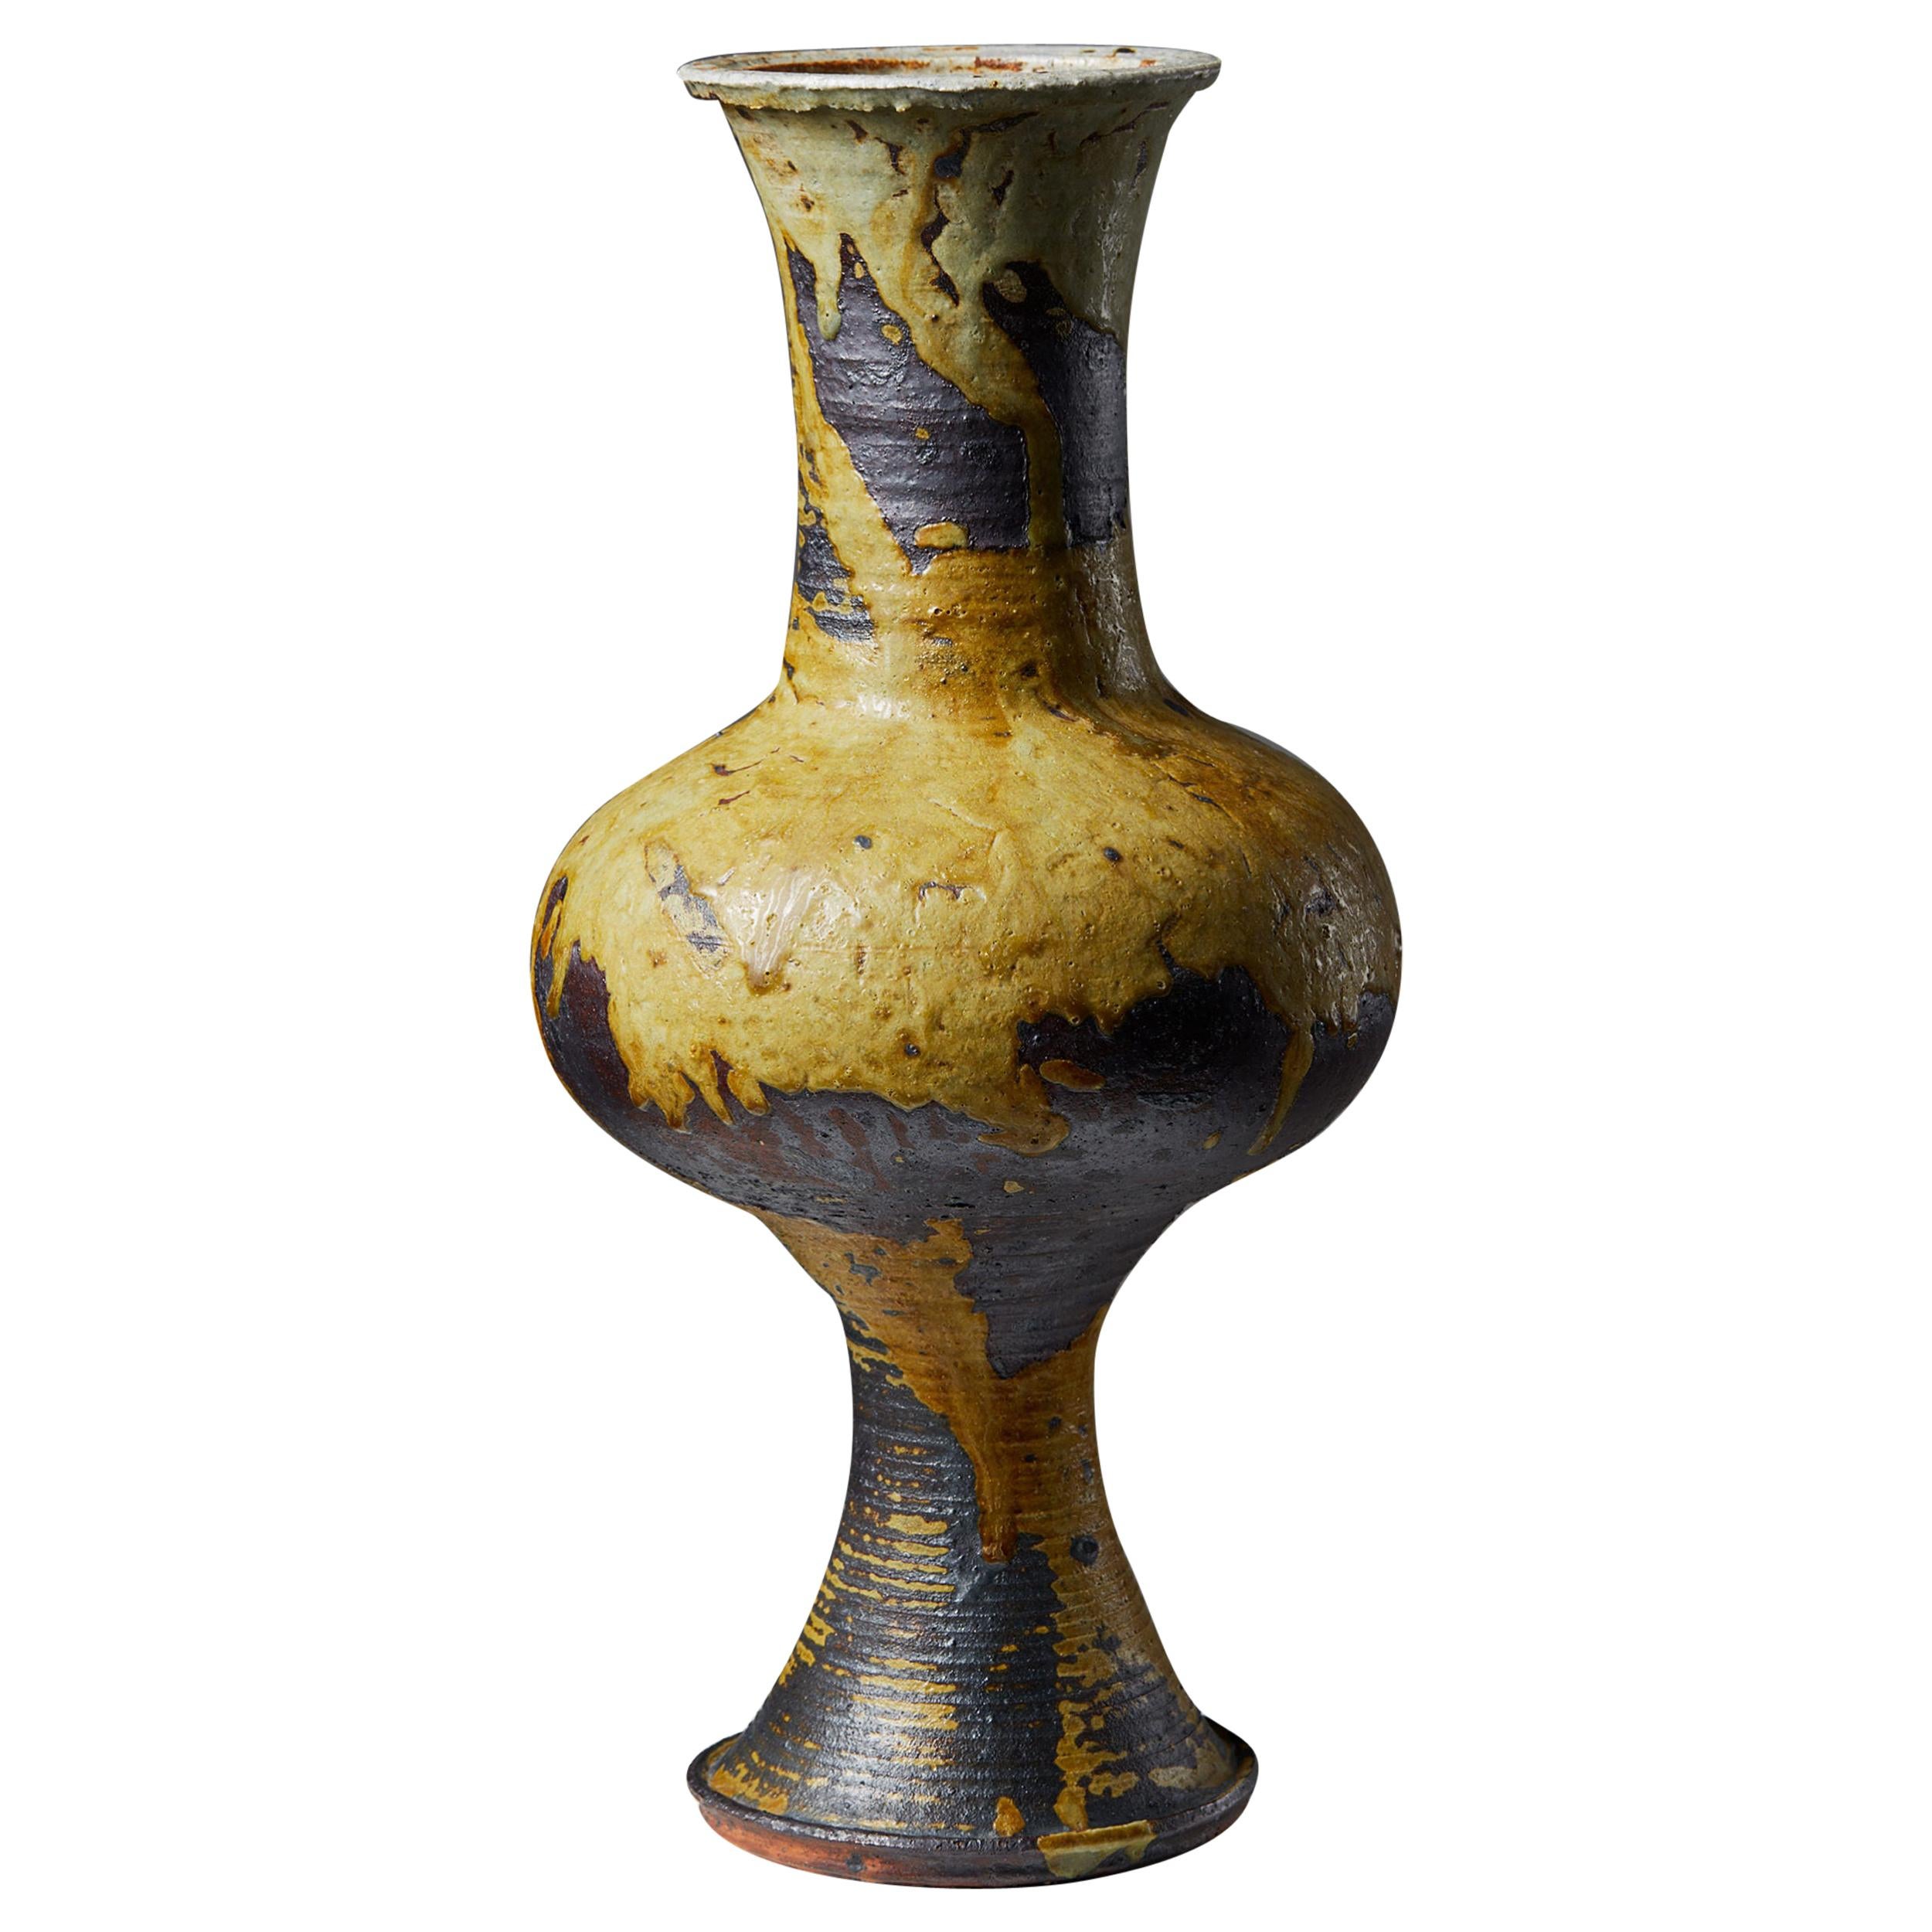 Vase Designed by Kyllikki Salmenhaara for Arabia